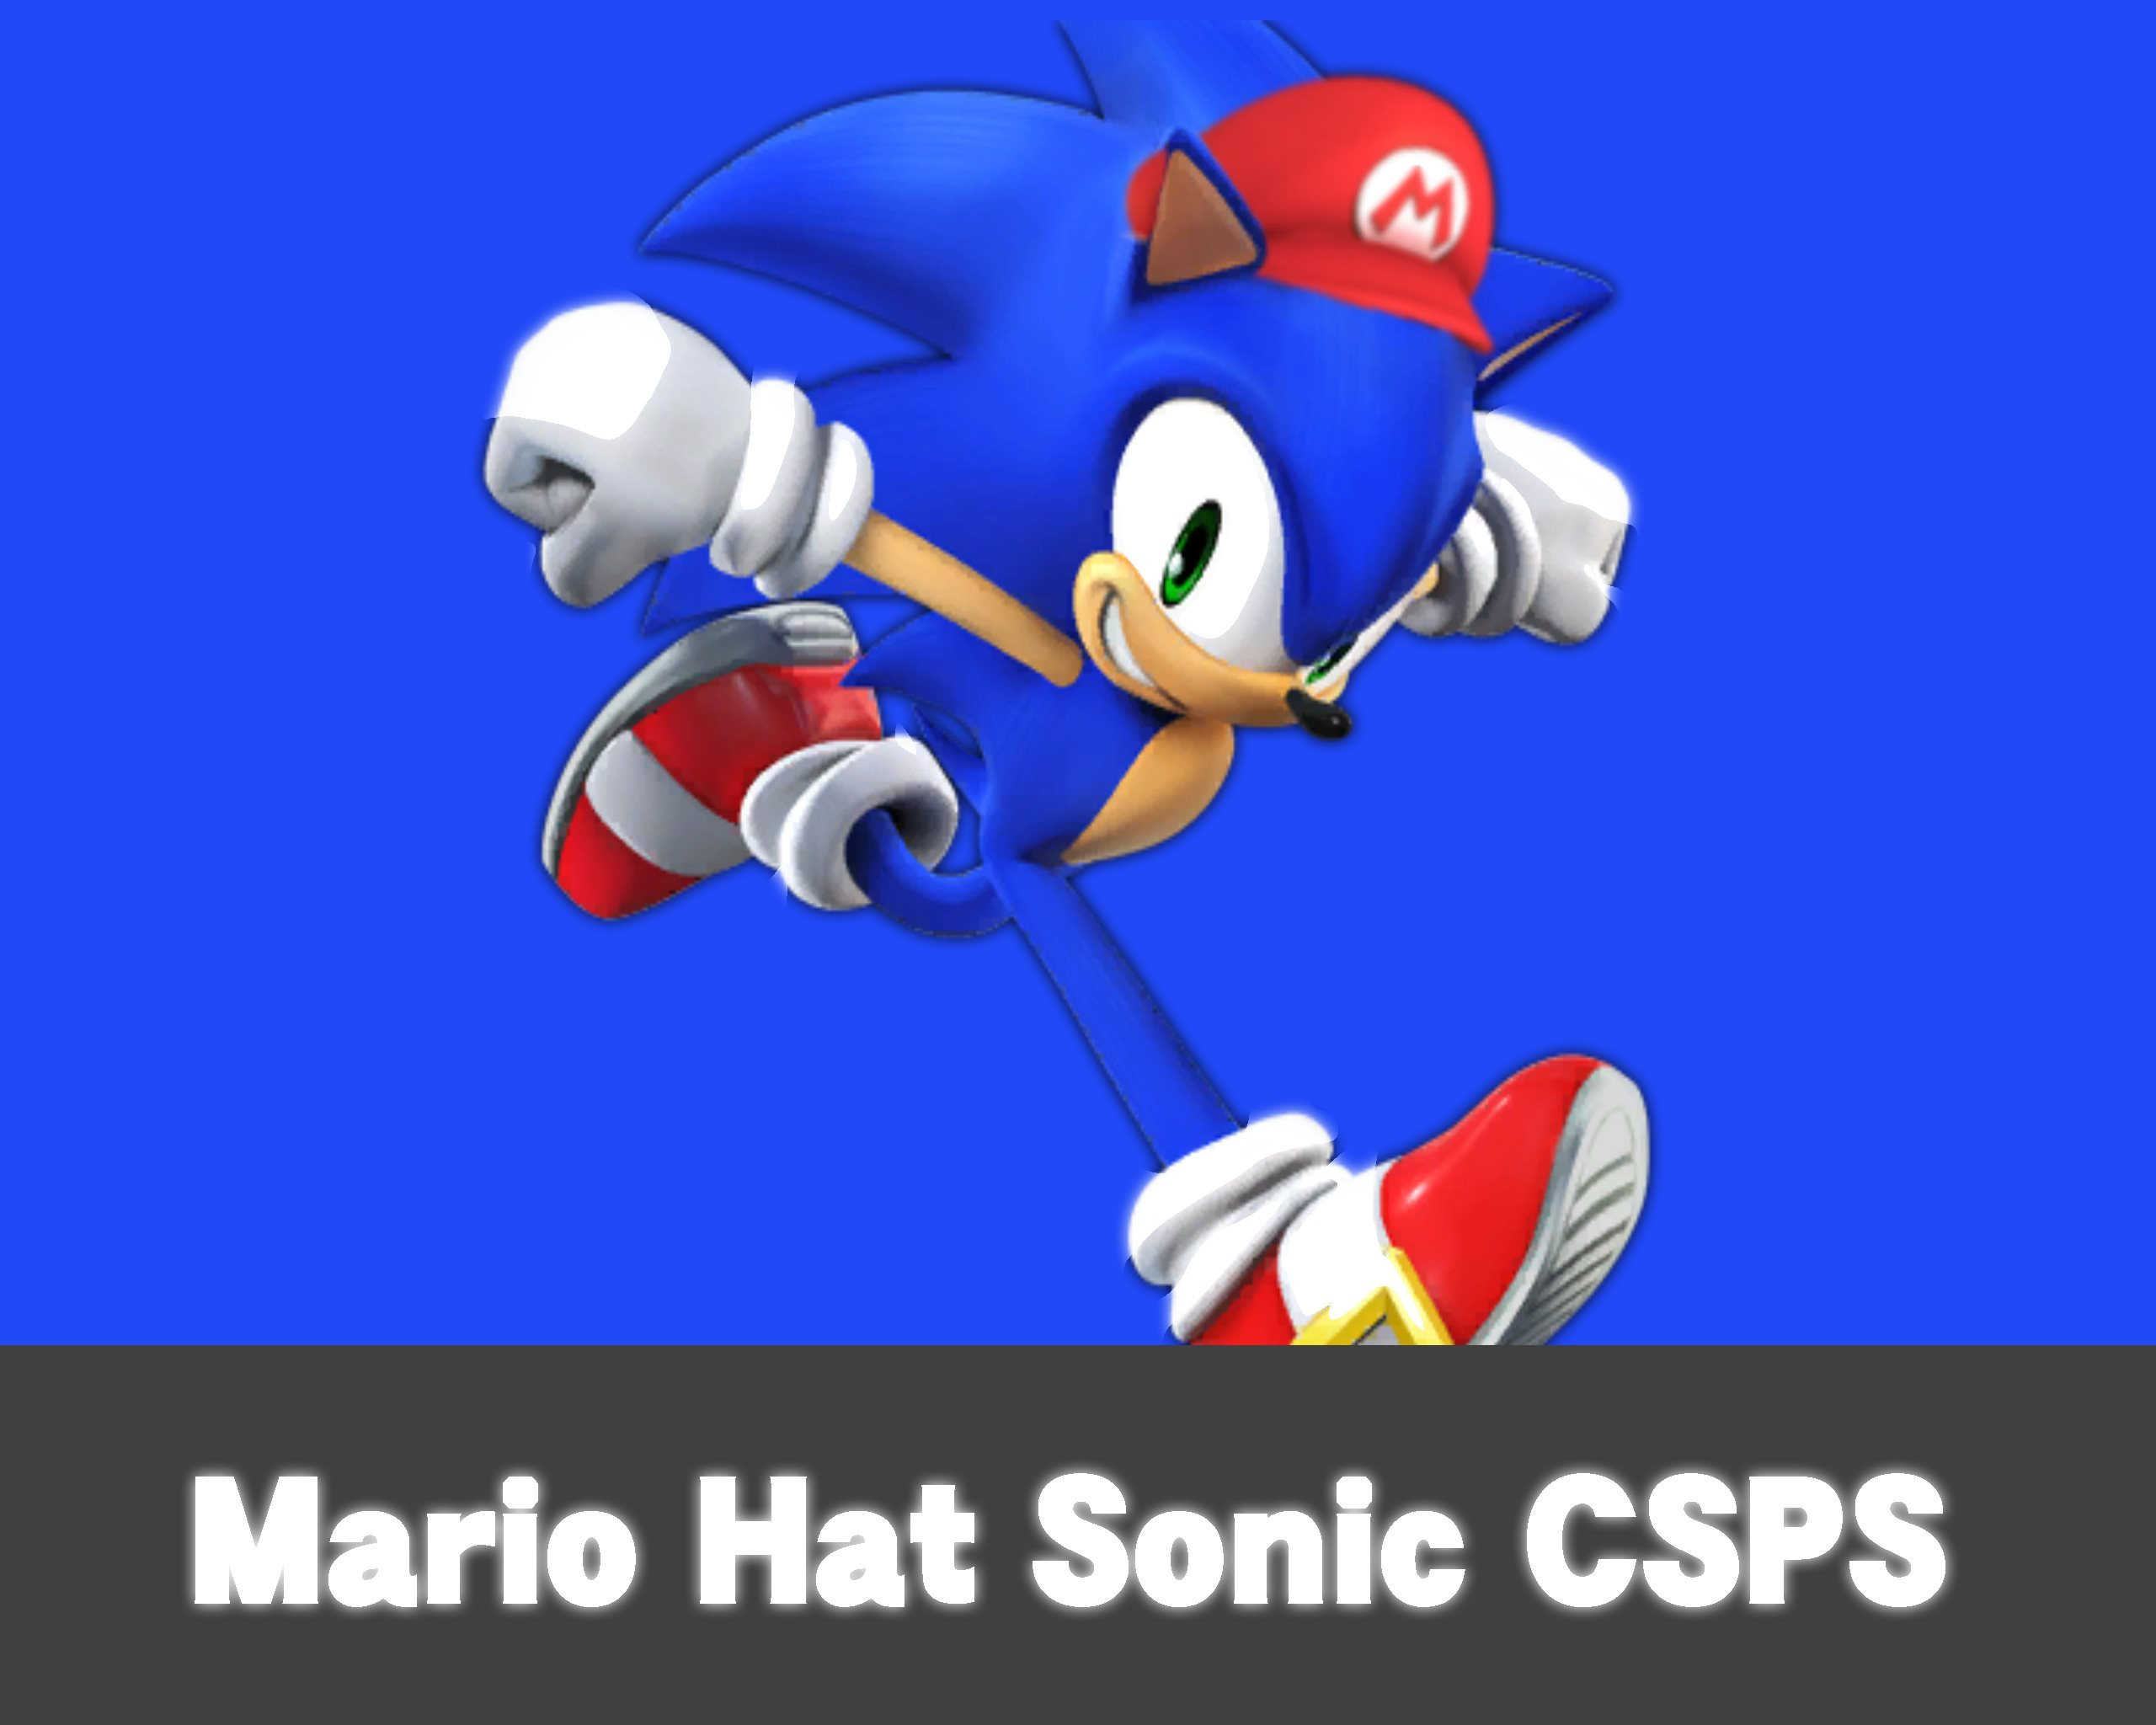 2560x2048 Sonic with Mario hat CSPS!